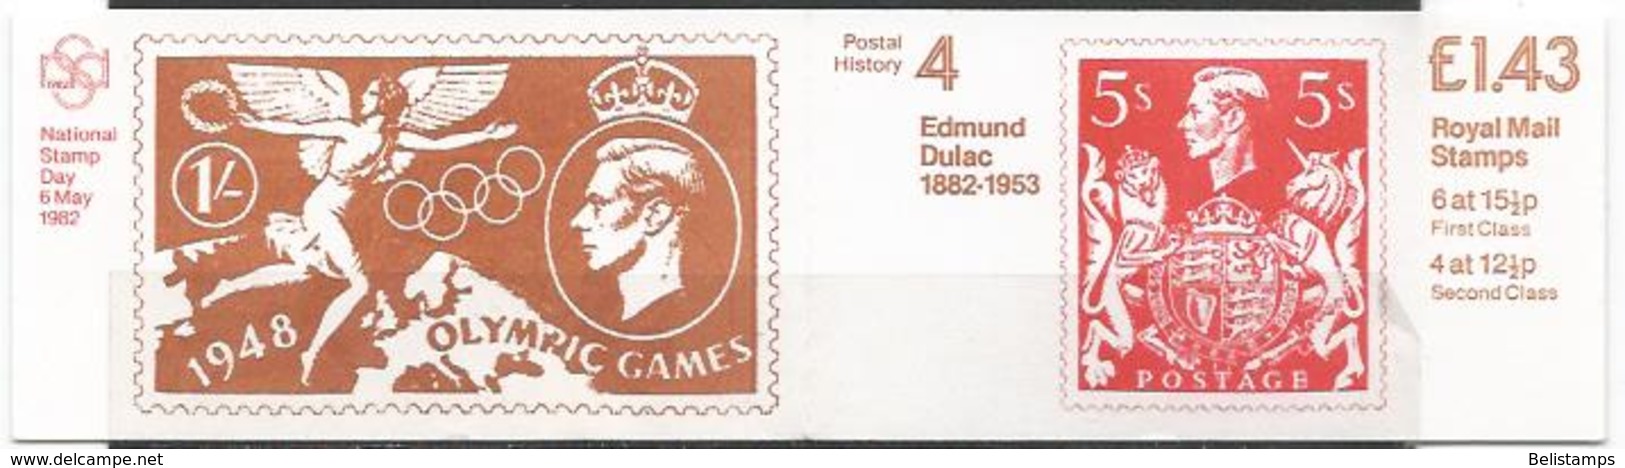 Great Britain 1982. Scott #BK573 (MNH) Postal History * - Carnets